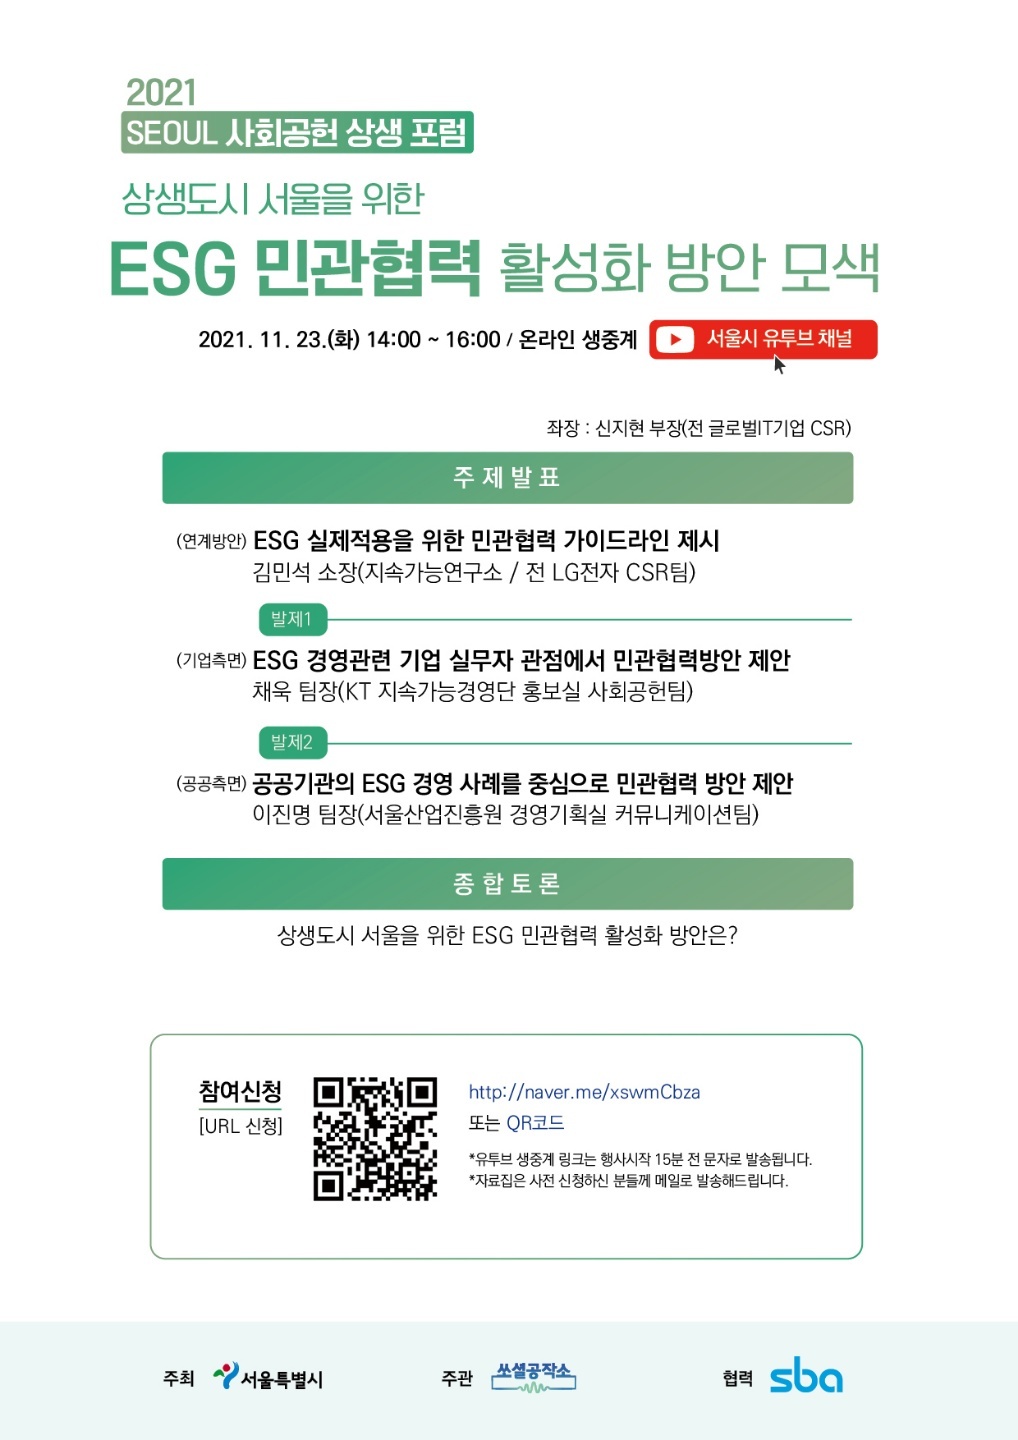 『2021 SEOUL 사회공헌 상생 포럼』 온라인 개최 사전신청 안내 이미지 1 - 본문에 자세한설명을 제공합니다.